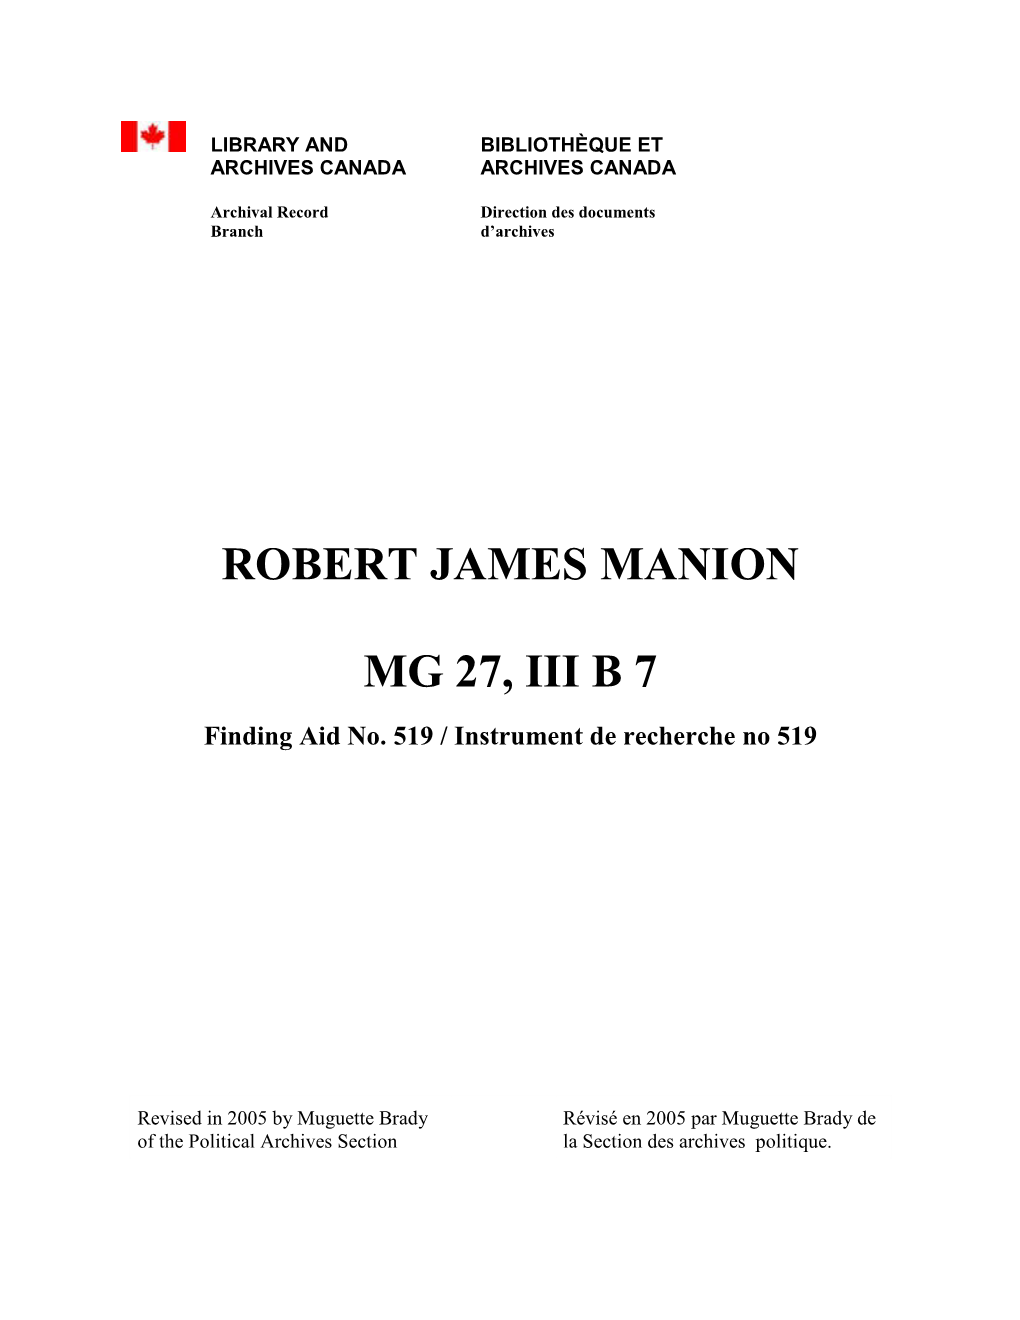 Robert James Manion Mg 27, Iii B 7